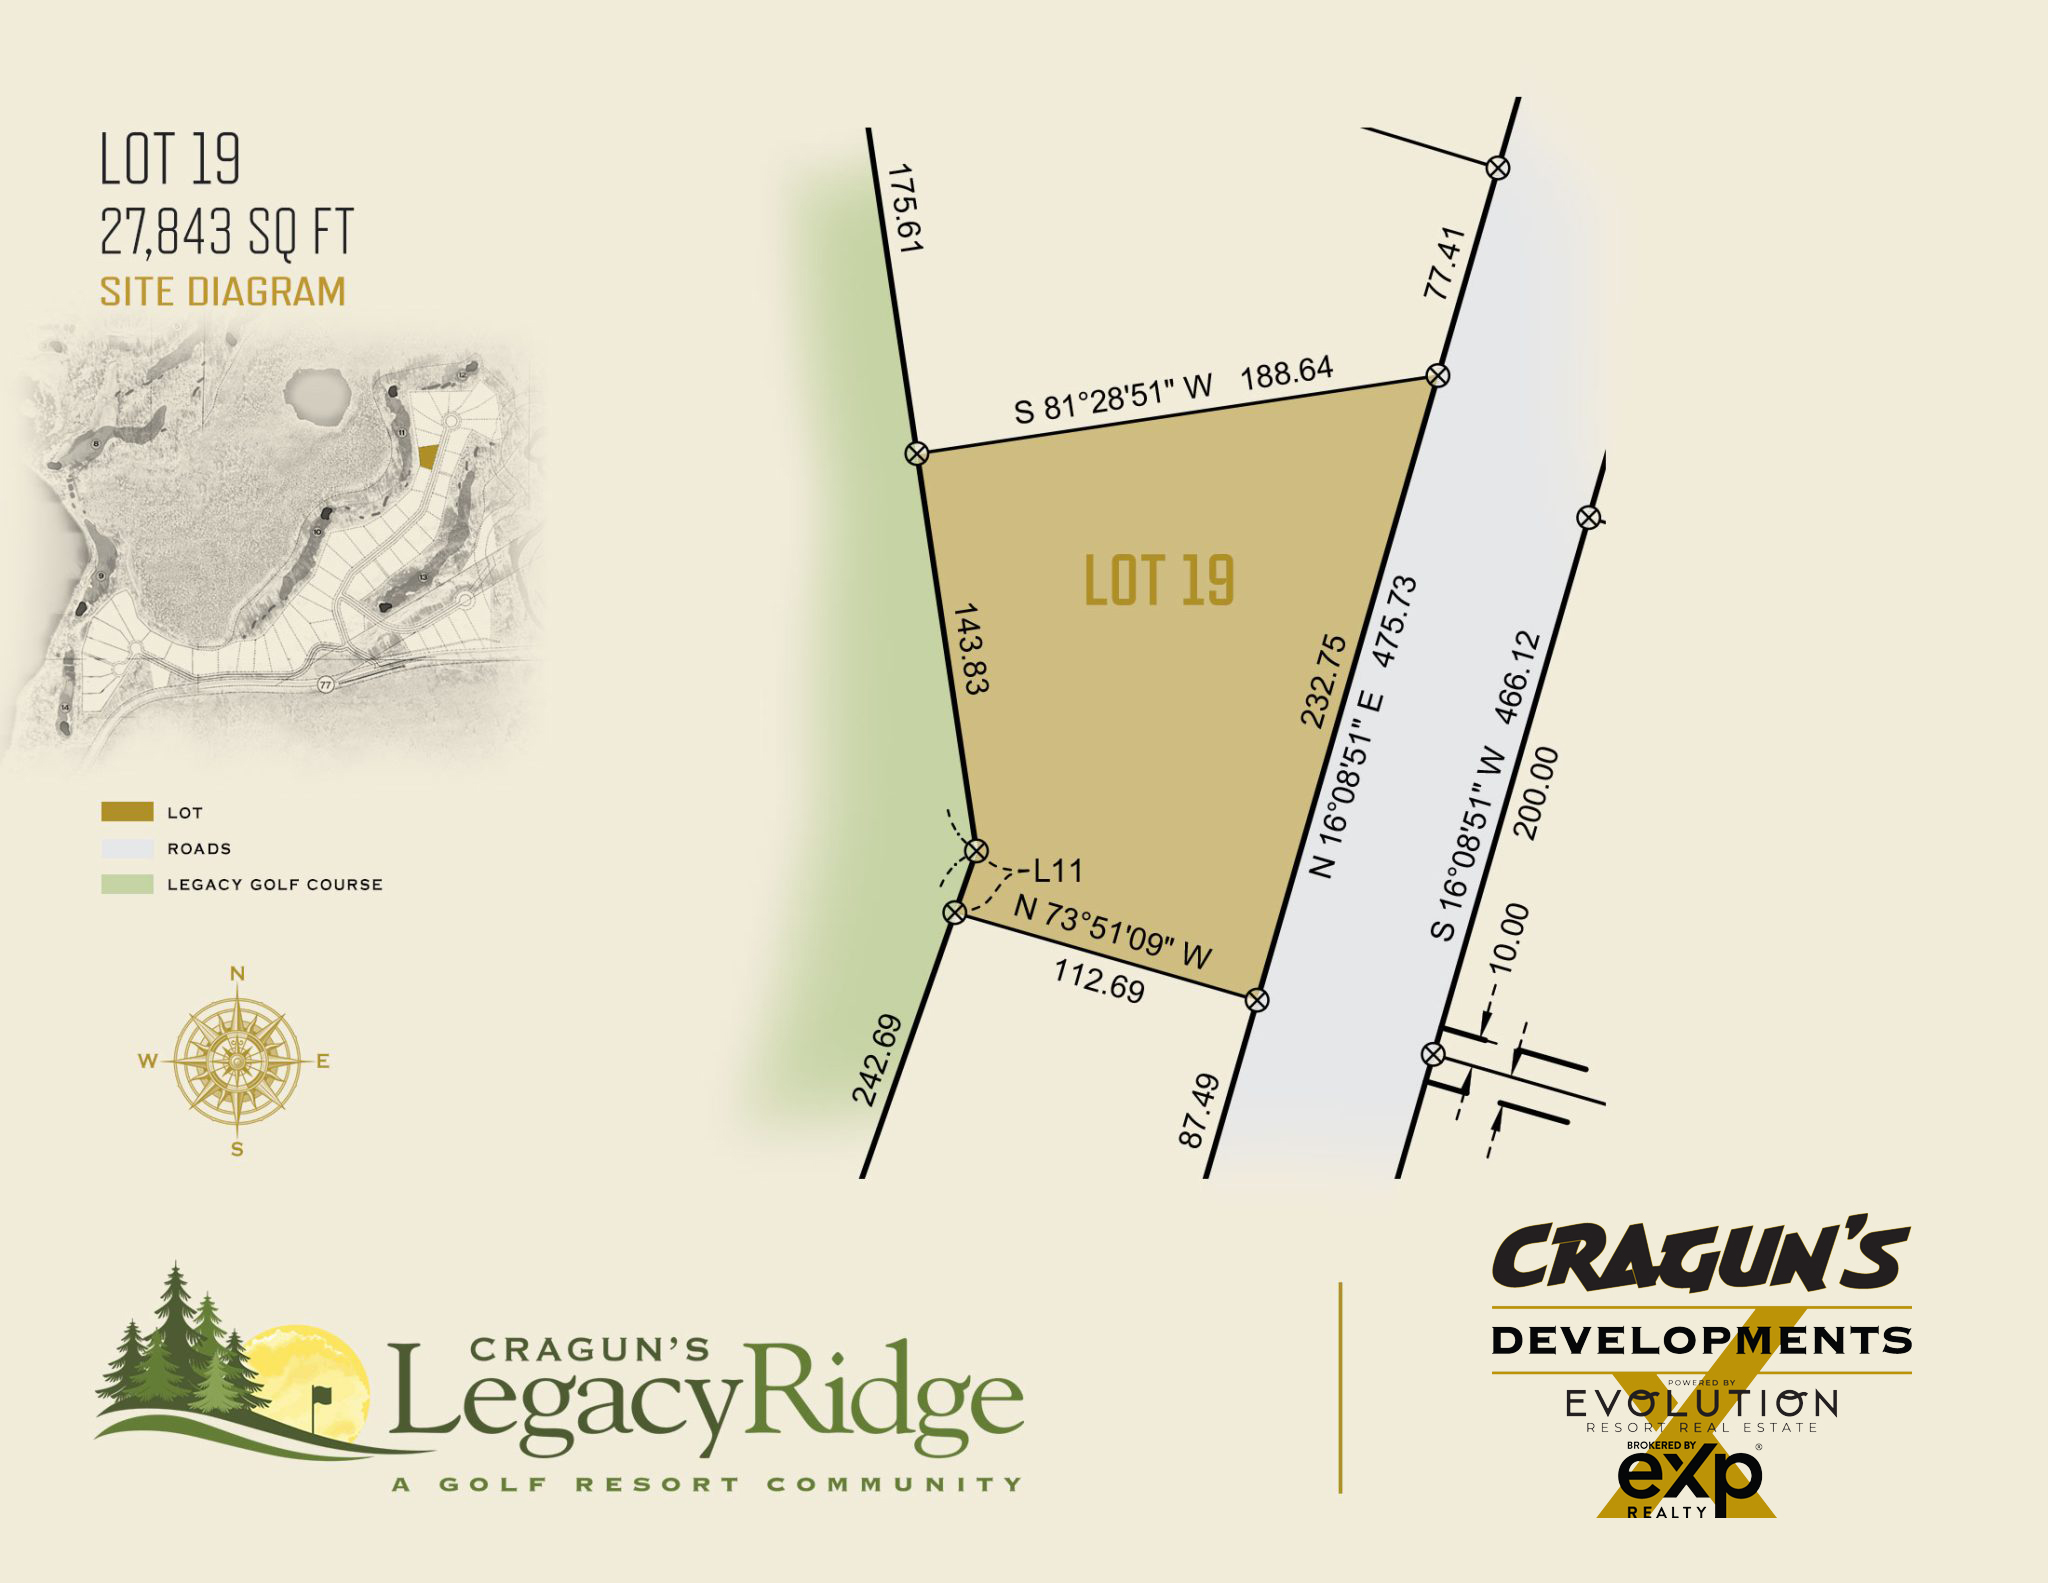 Legacy Ridge Lot 19 at Cragun's Developments in Brainerd, MN